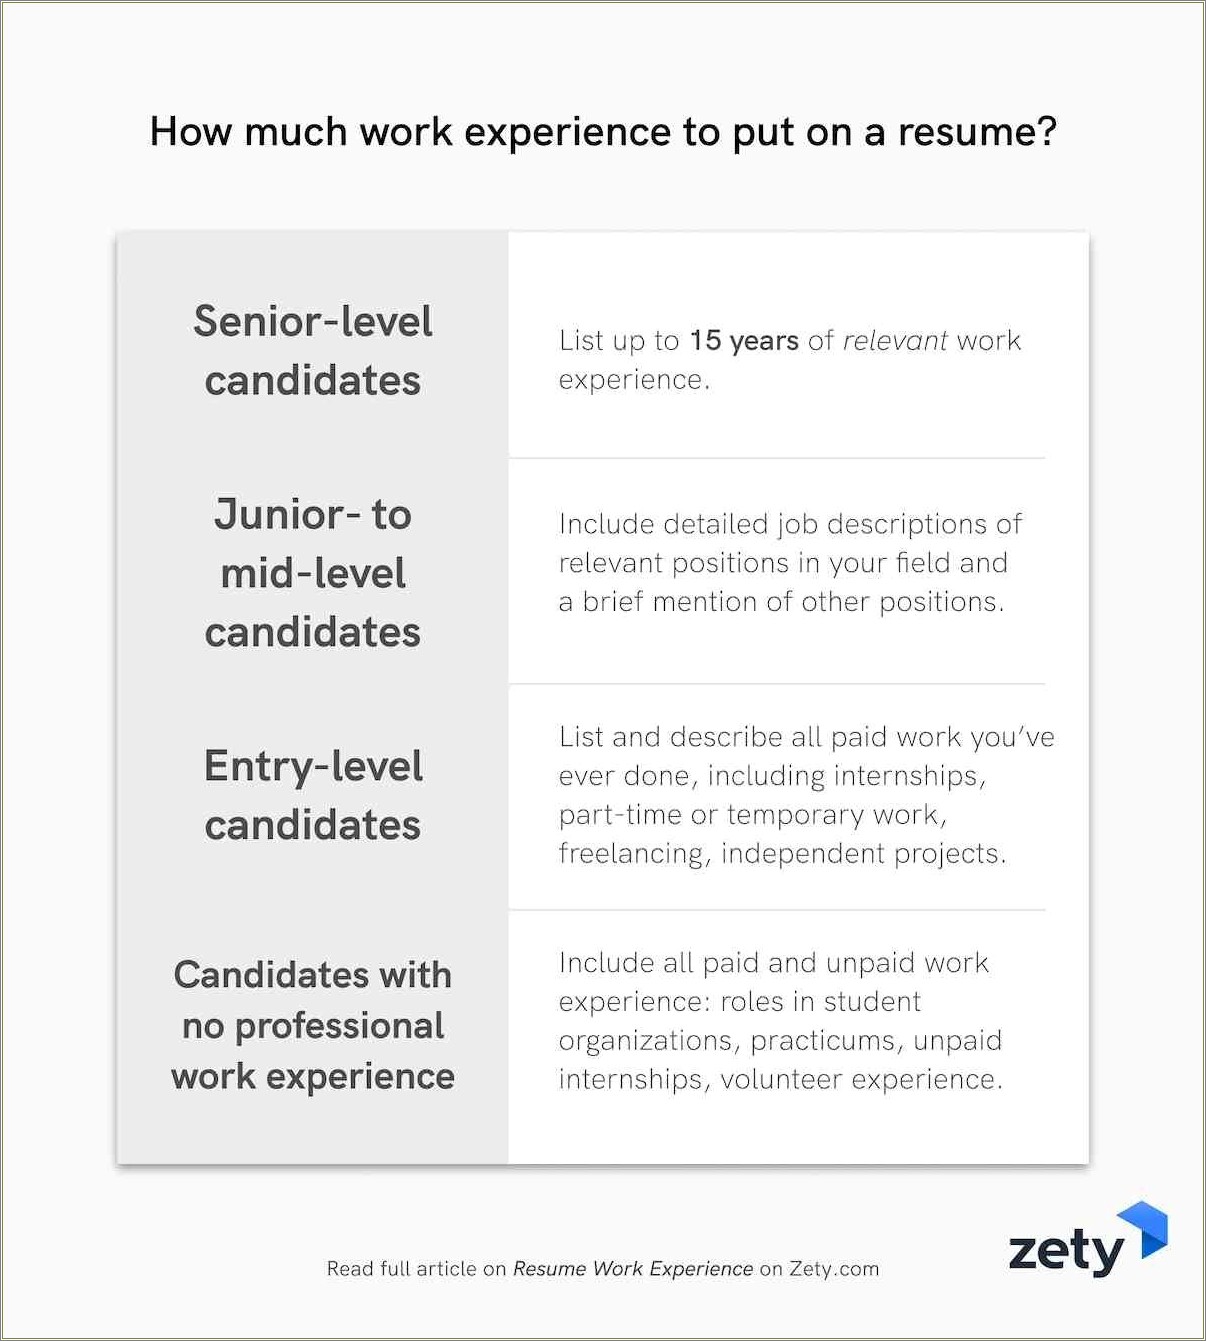 Resume List Job In Order Or Relevance